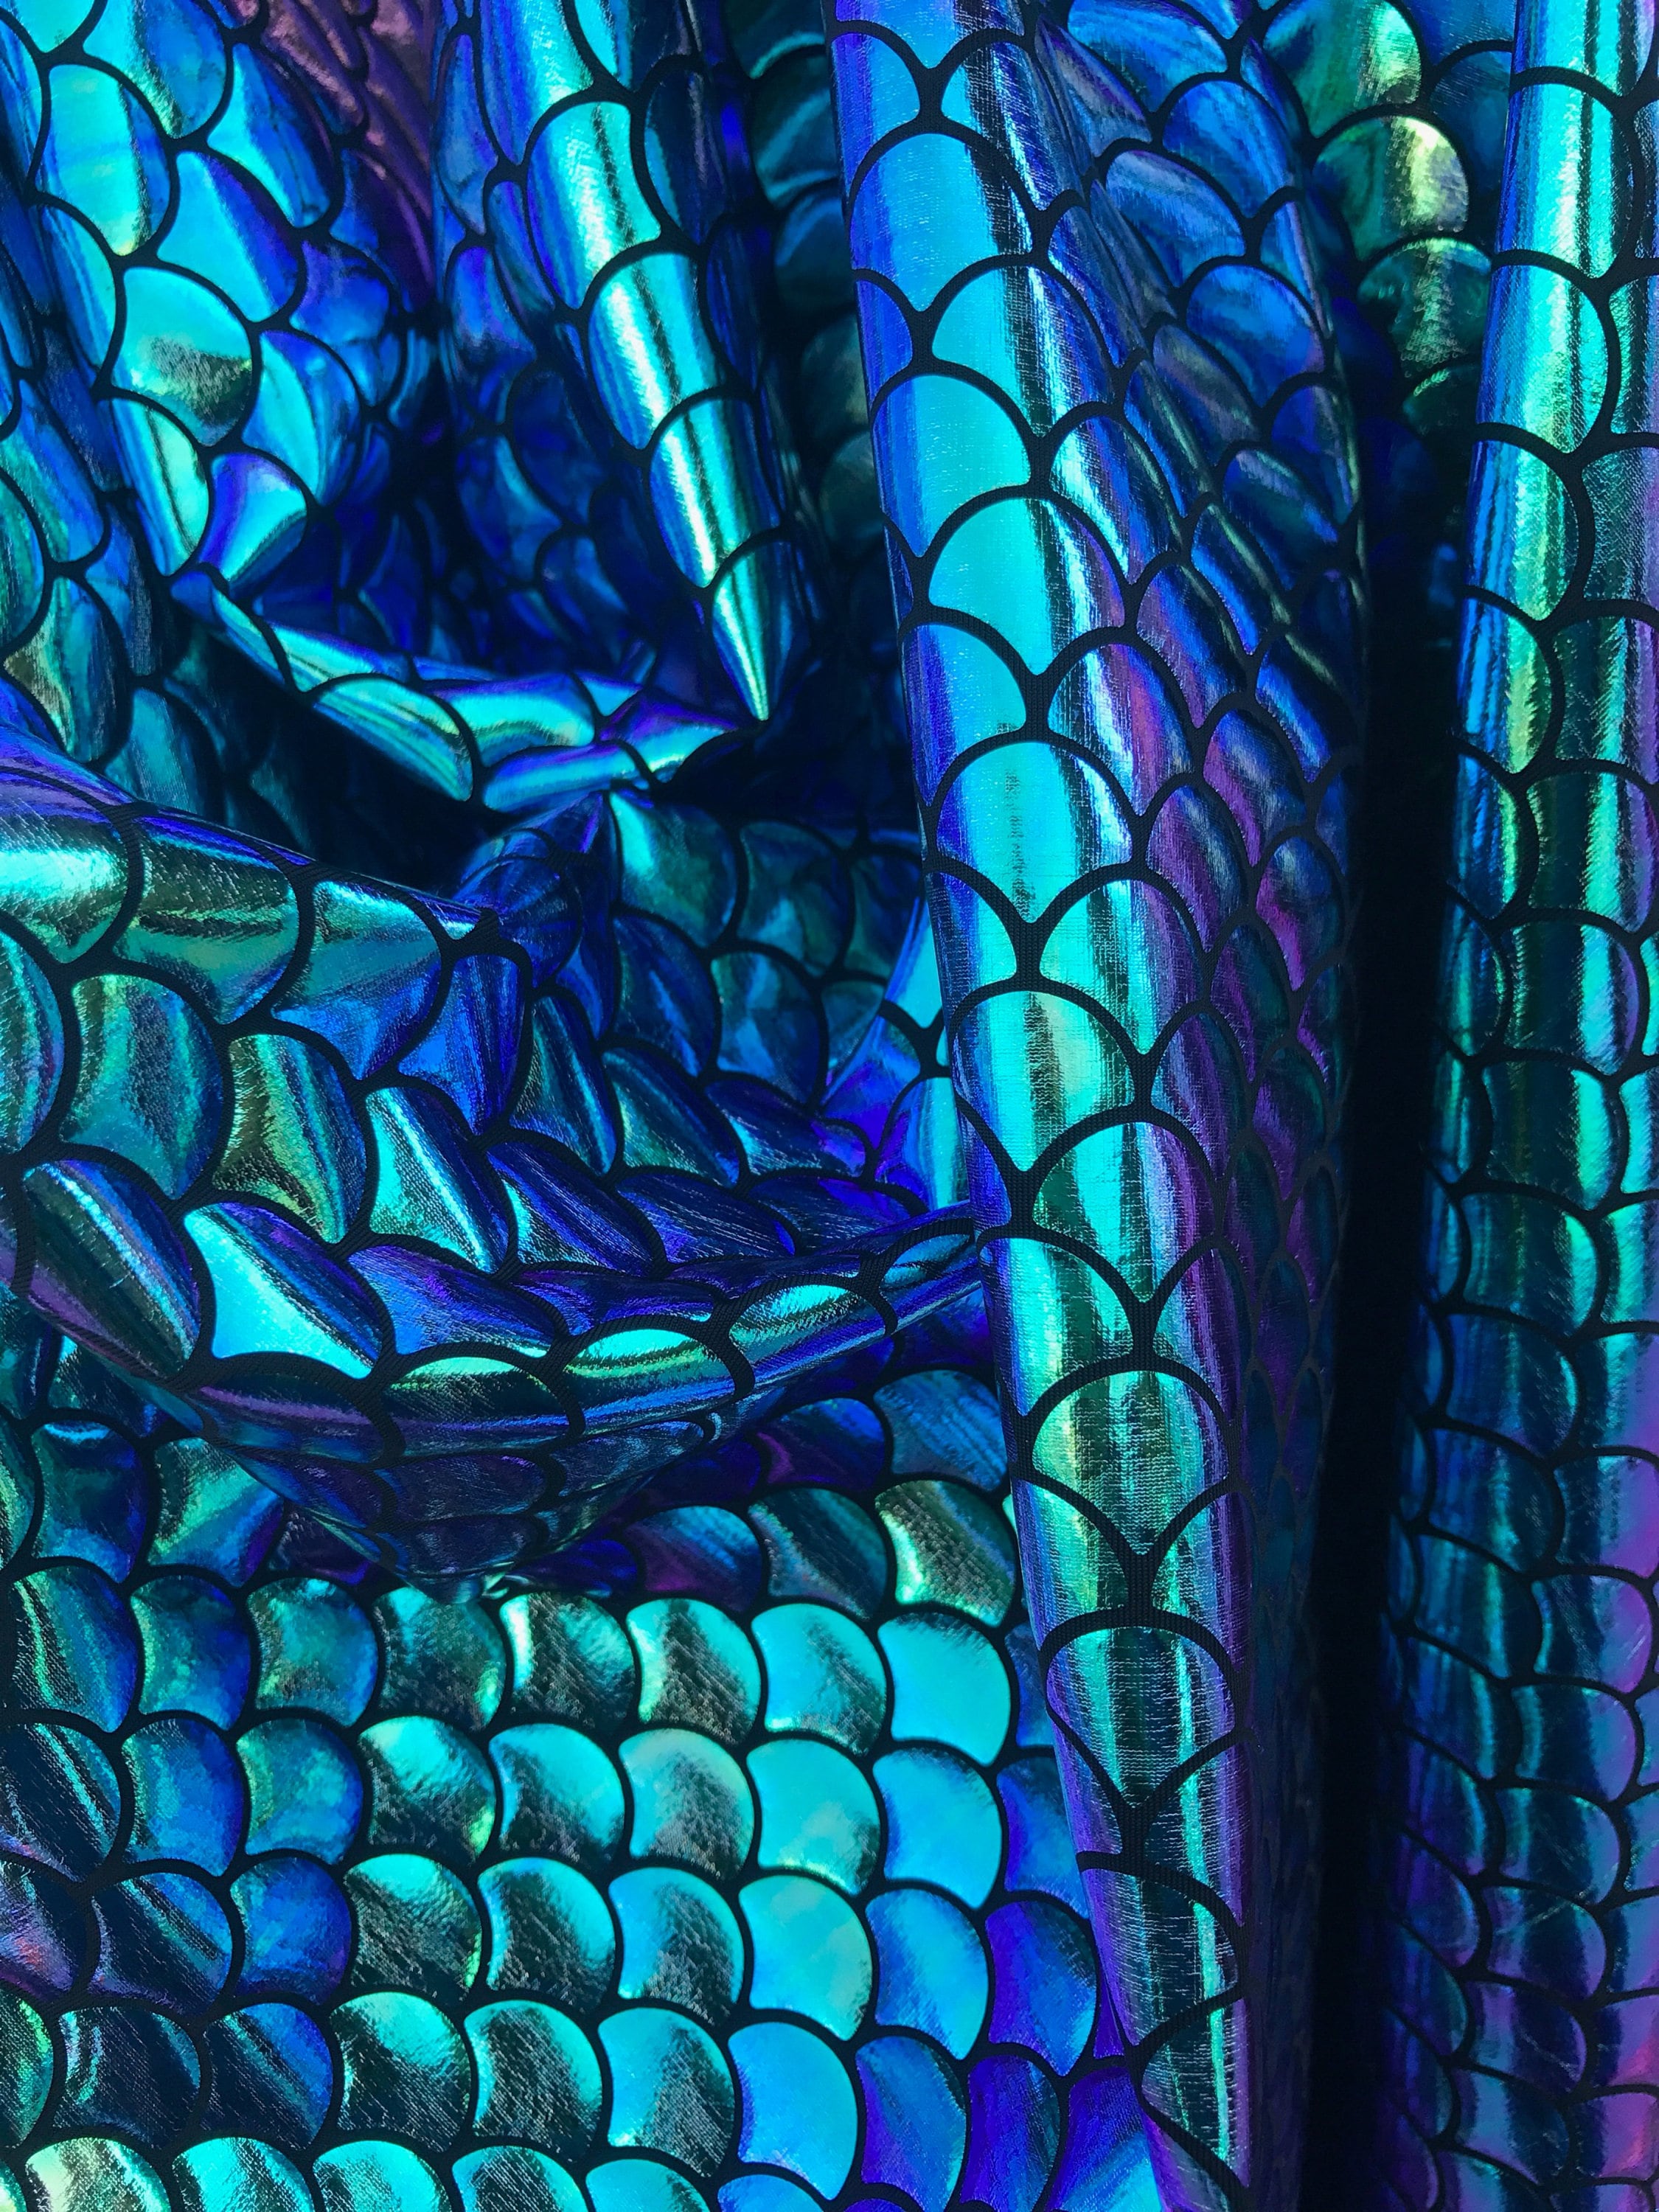 BLUE Mermaid Fish Scales Fabric, Mermaid fabric spandex 58 wide, metalic  fabric stretchy knit Yardage bling Fabric